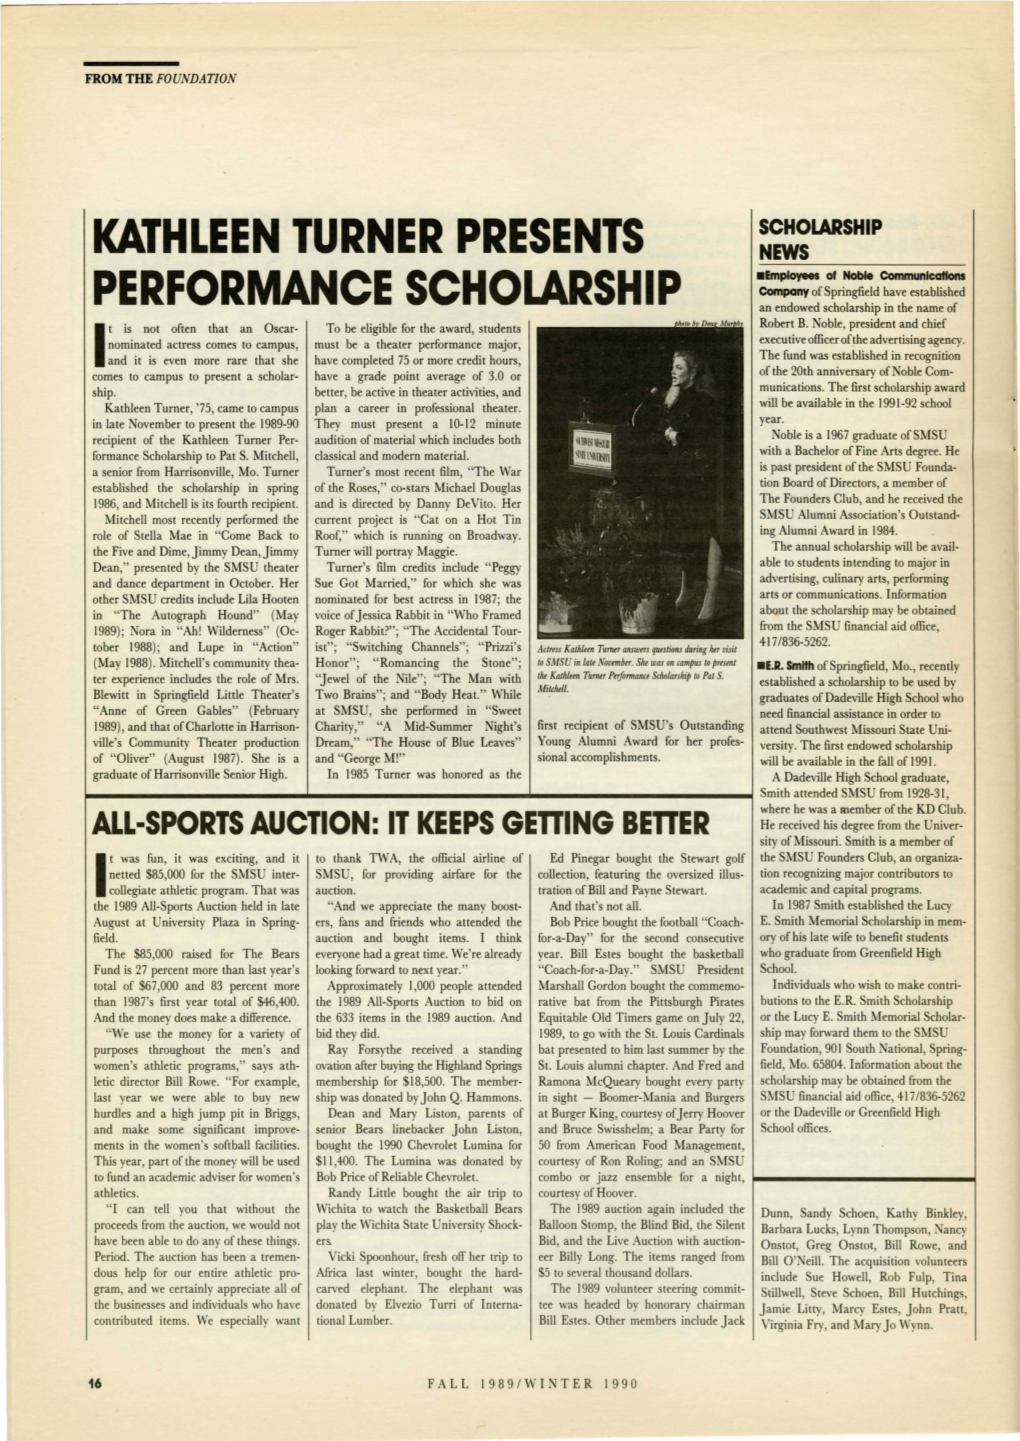 Kathleen Turner Presents Performance Scholarship